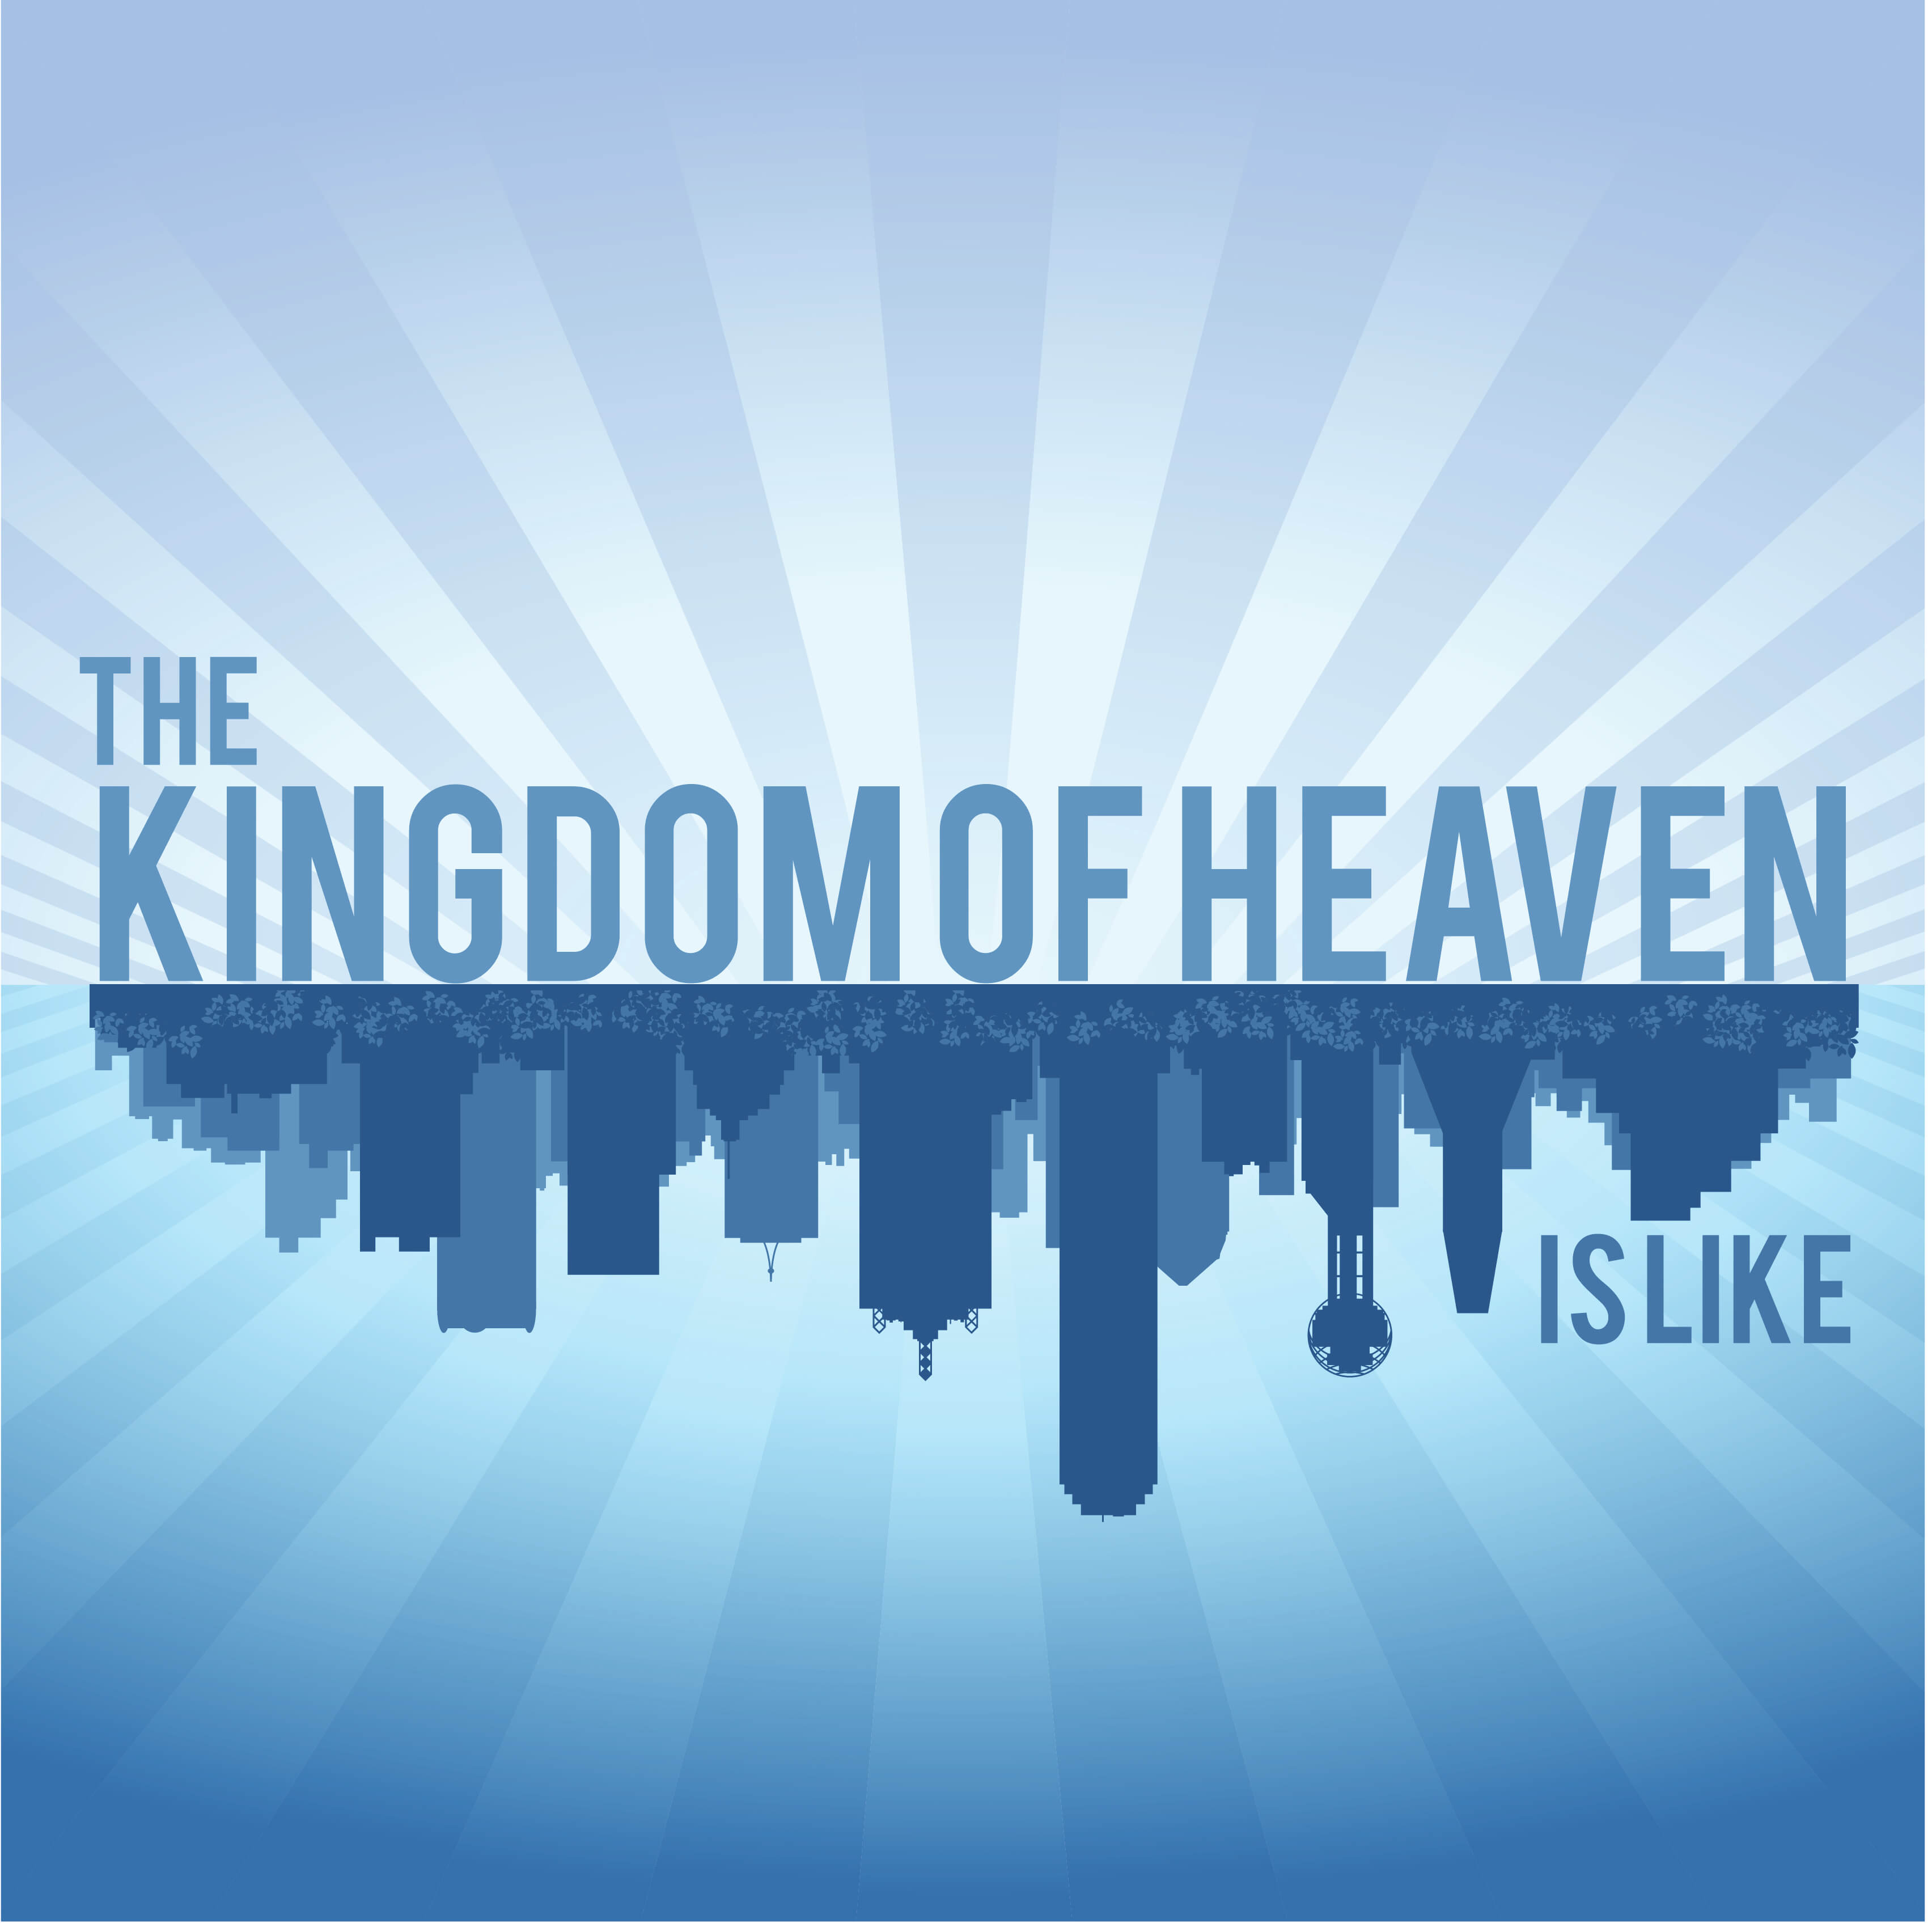 The Kingdom of Heaven is Like... - corey trevathan